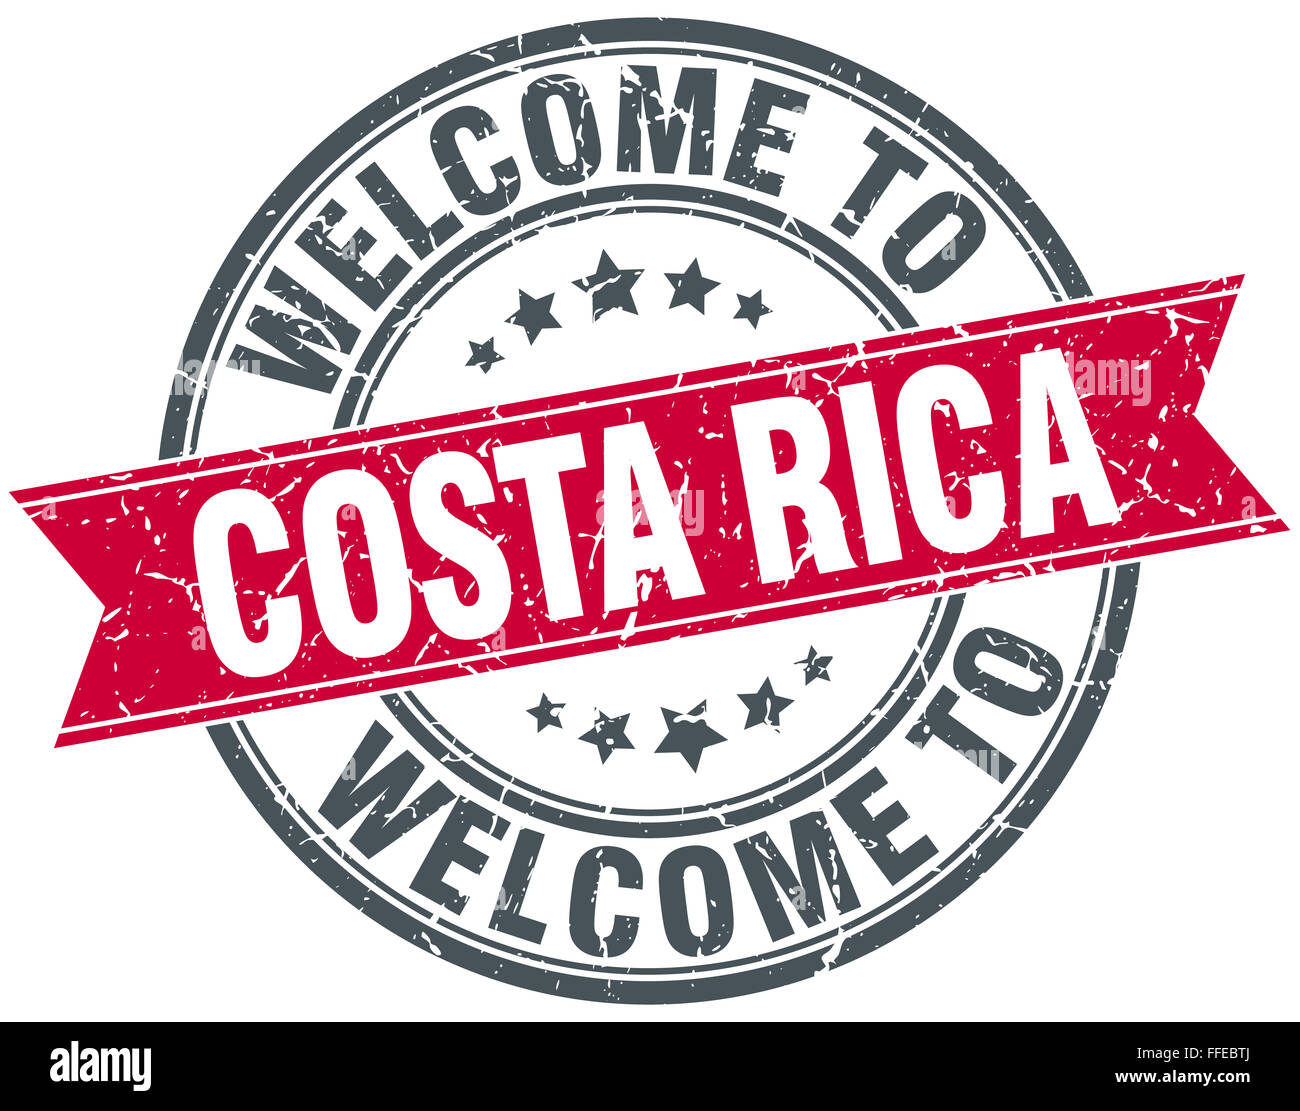 Bienvenue au Costa Rica rouge rond vintage stamp Banque D'Images